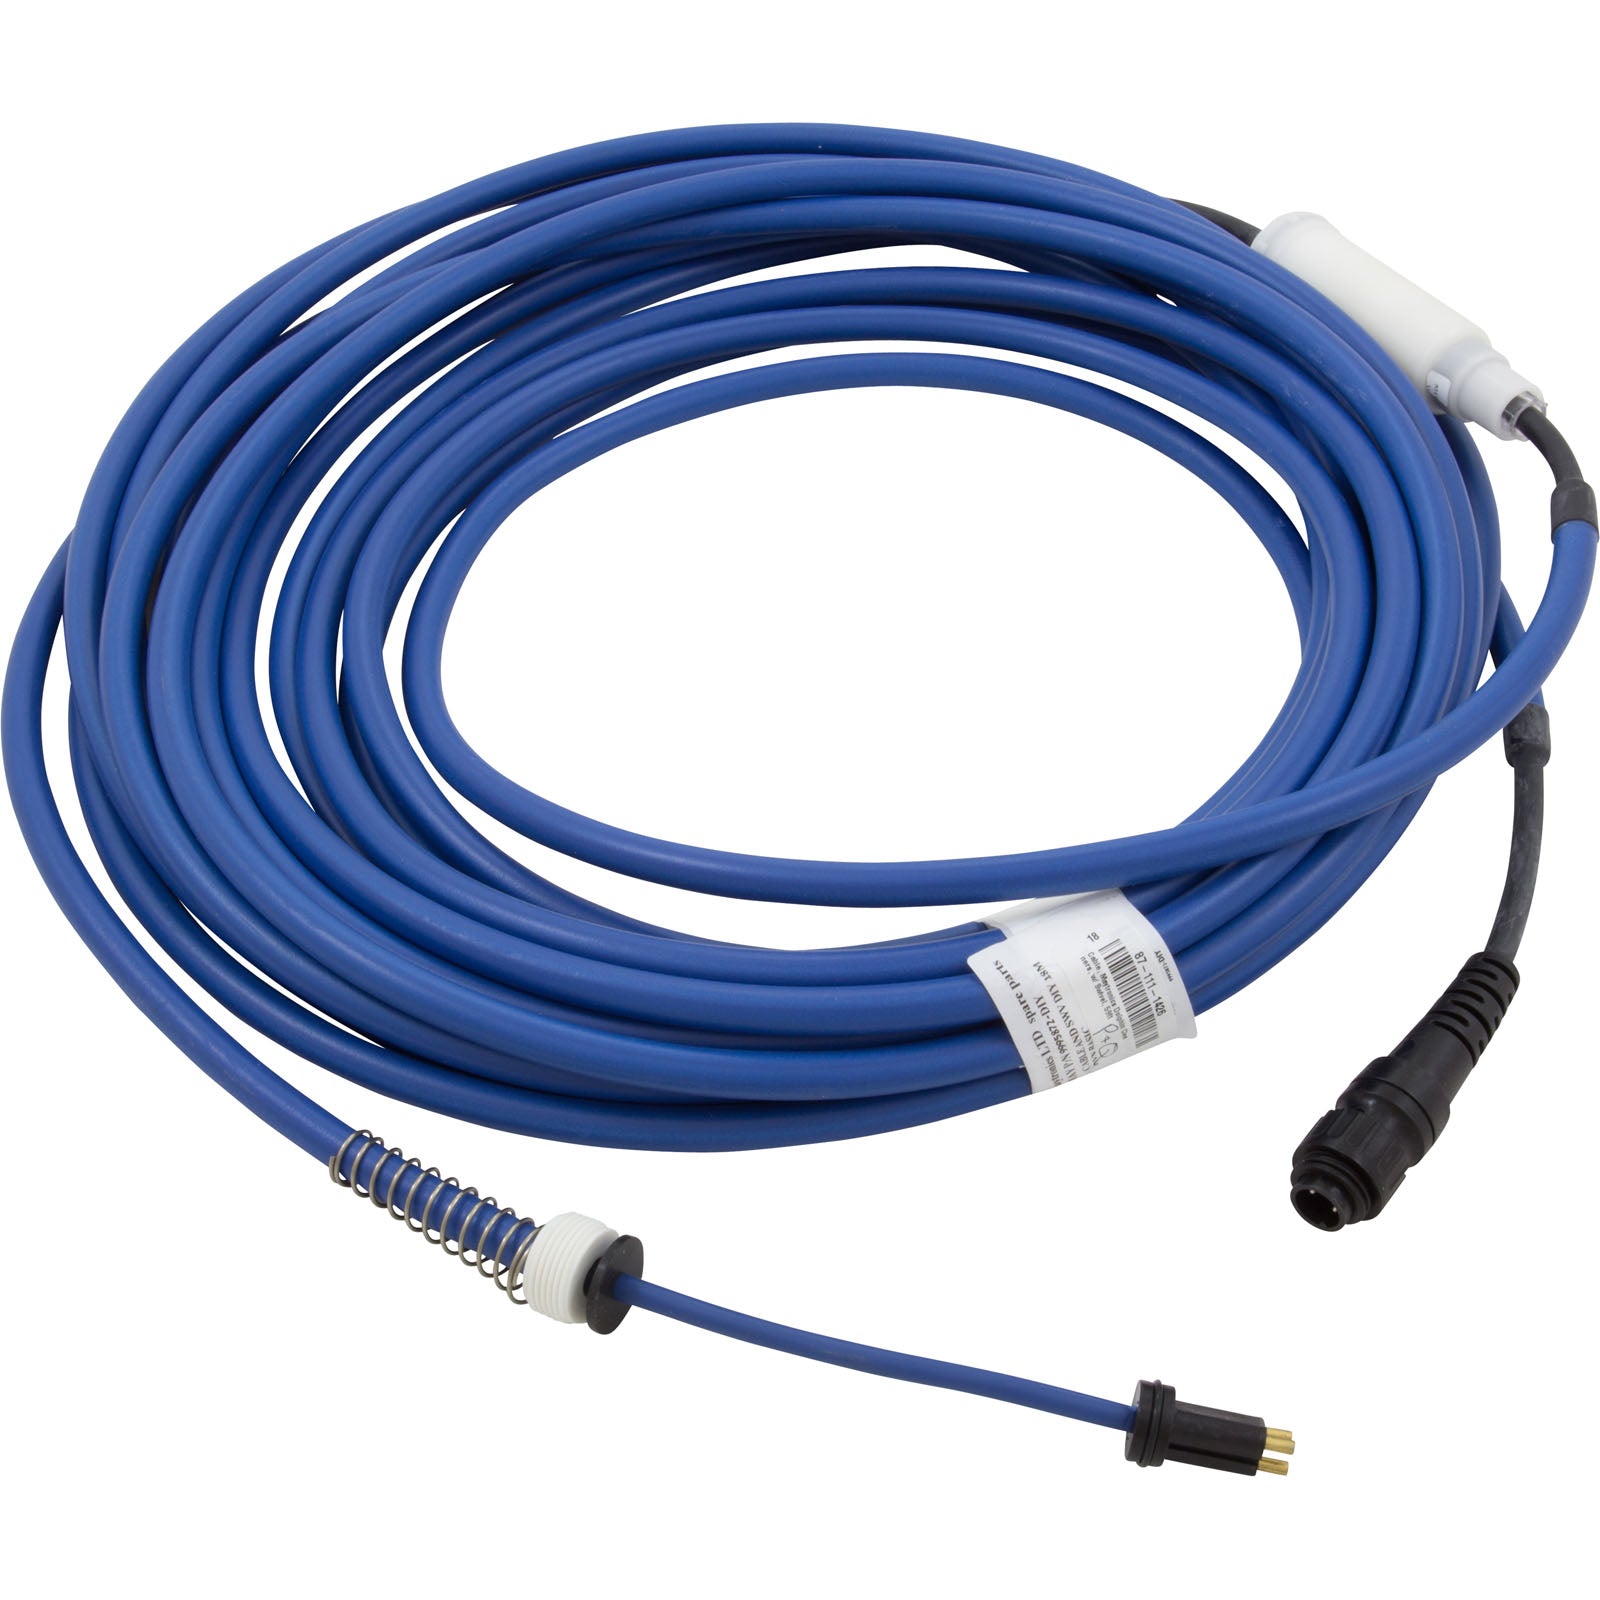 Cable w/ Swivel, 59ft, Maytronics 9995872-DIY